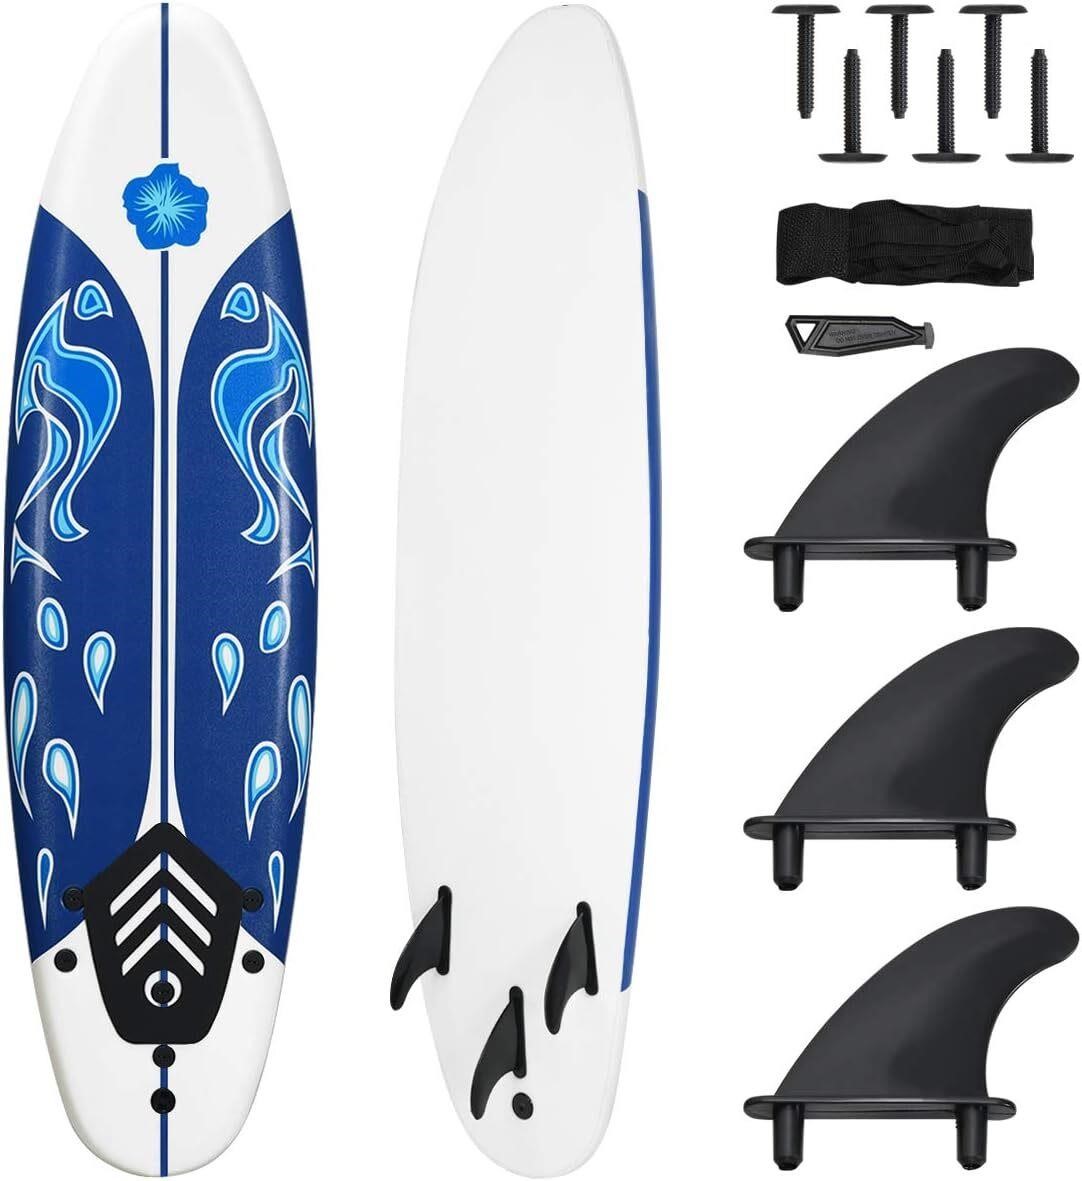 $96  Giantex 6 Ft Surfboard  3 Fins  Leash  White